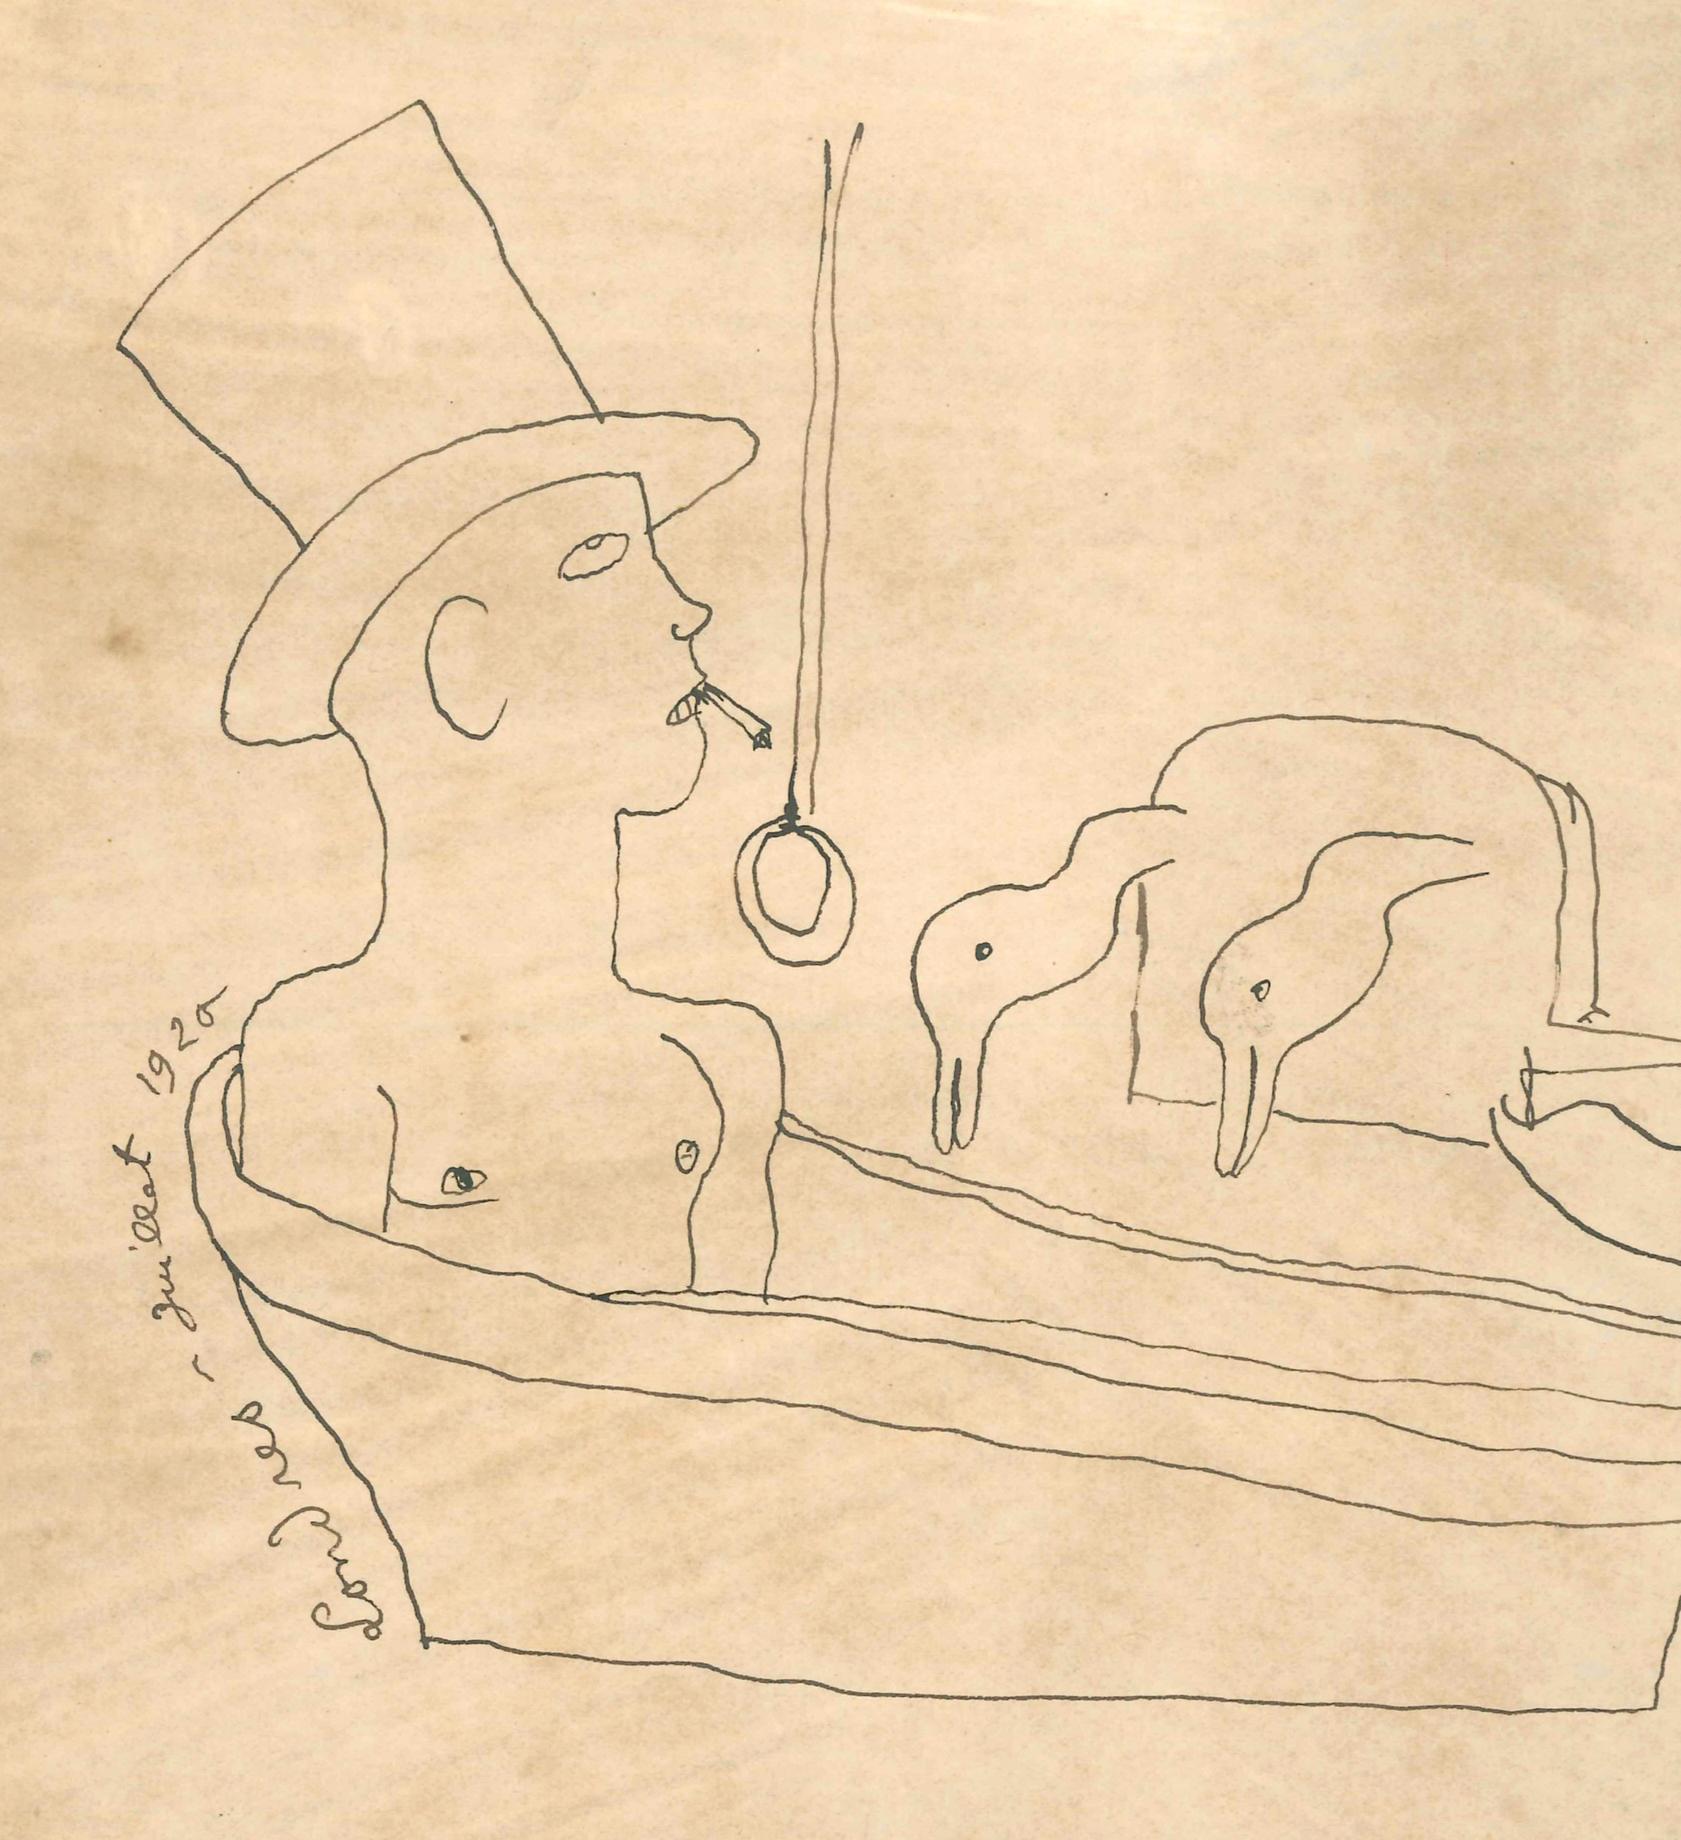 London Londres - Original China-Tintezeichnung von J. Cocteau - 1920 – Art von Jean Cocteau